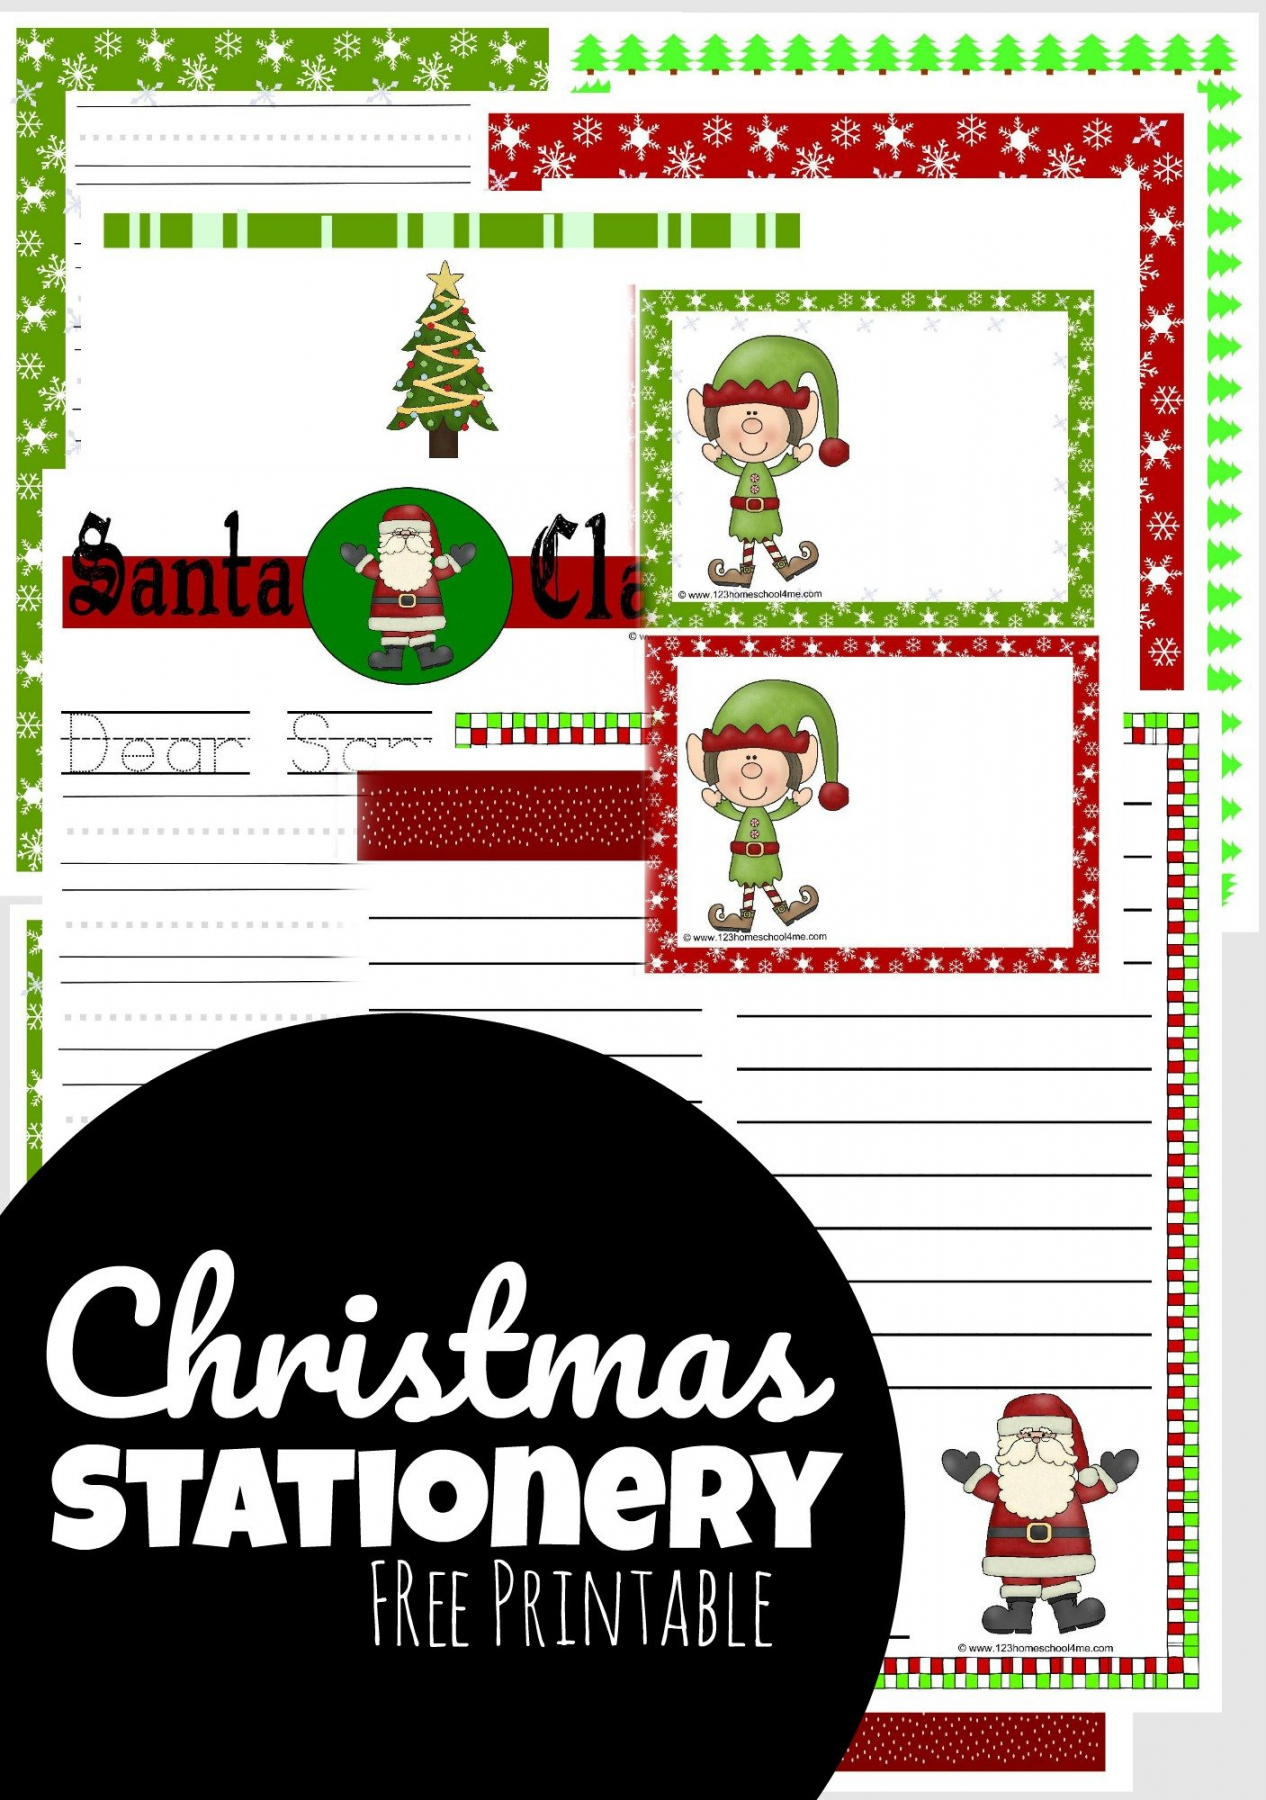 🎄 FREE Printable Christmas Stationery - FREE Printables - Free Printable Christmas Stationery